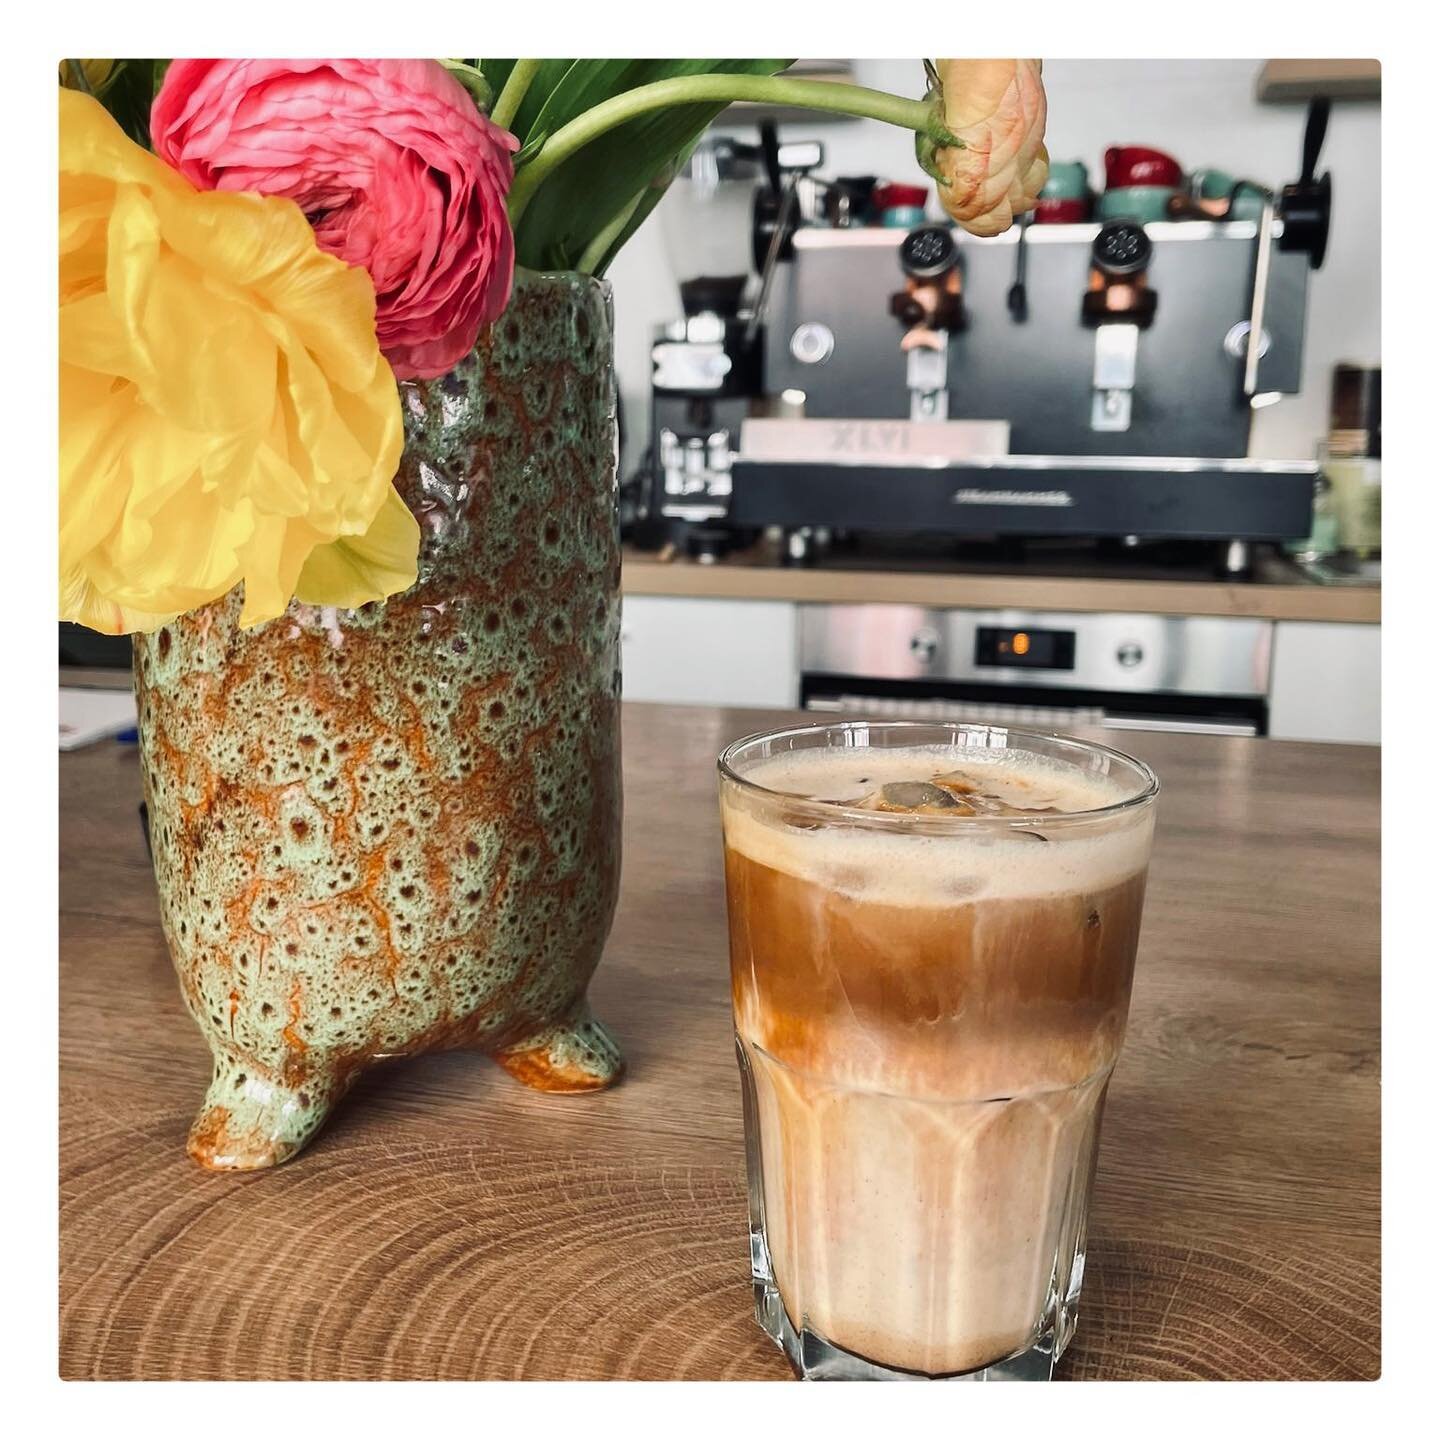 Guess it&rsquo;s Iced Latte time 🤩 

#froheostern 🐰

Danke an @kattakattasecondhand f&uuml;r die sch&ouml;nen Blumen!